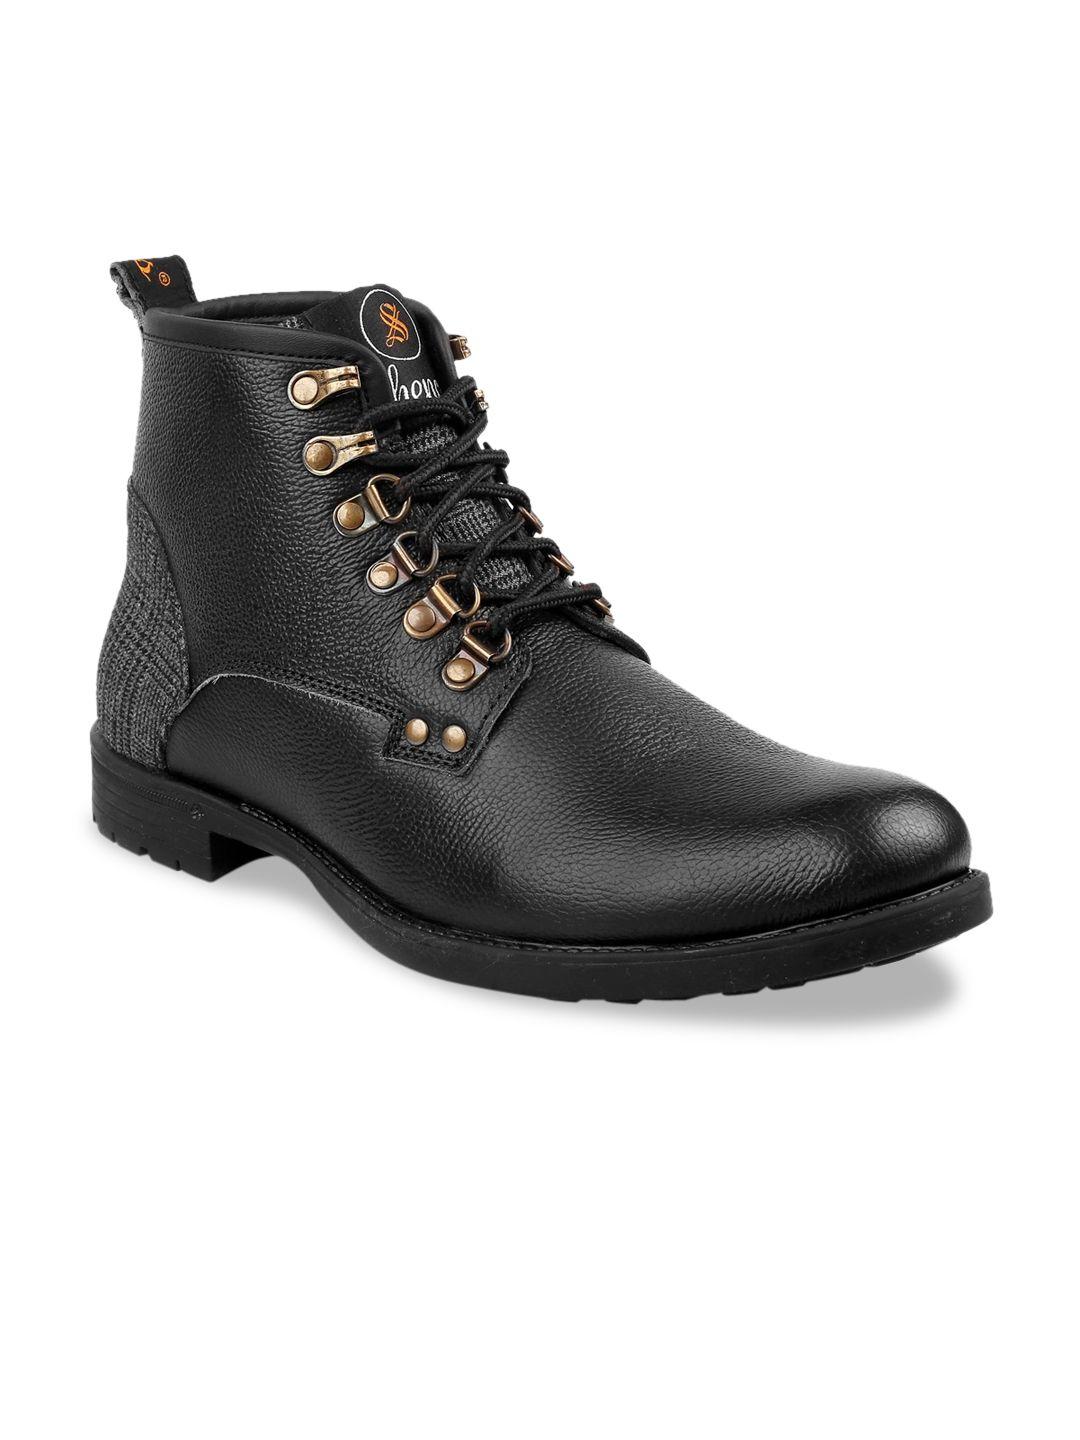 shences men black textured leather flat boots